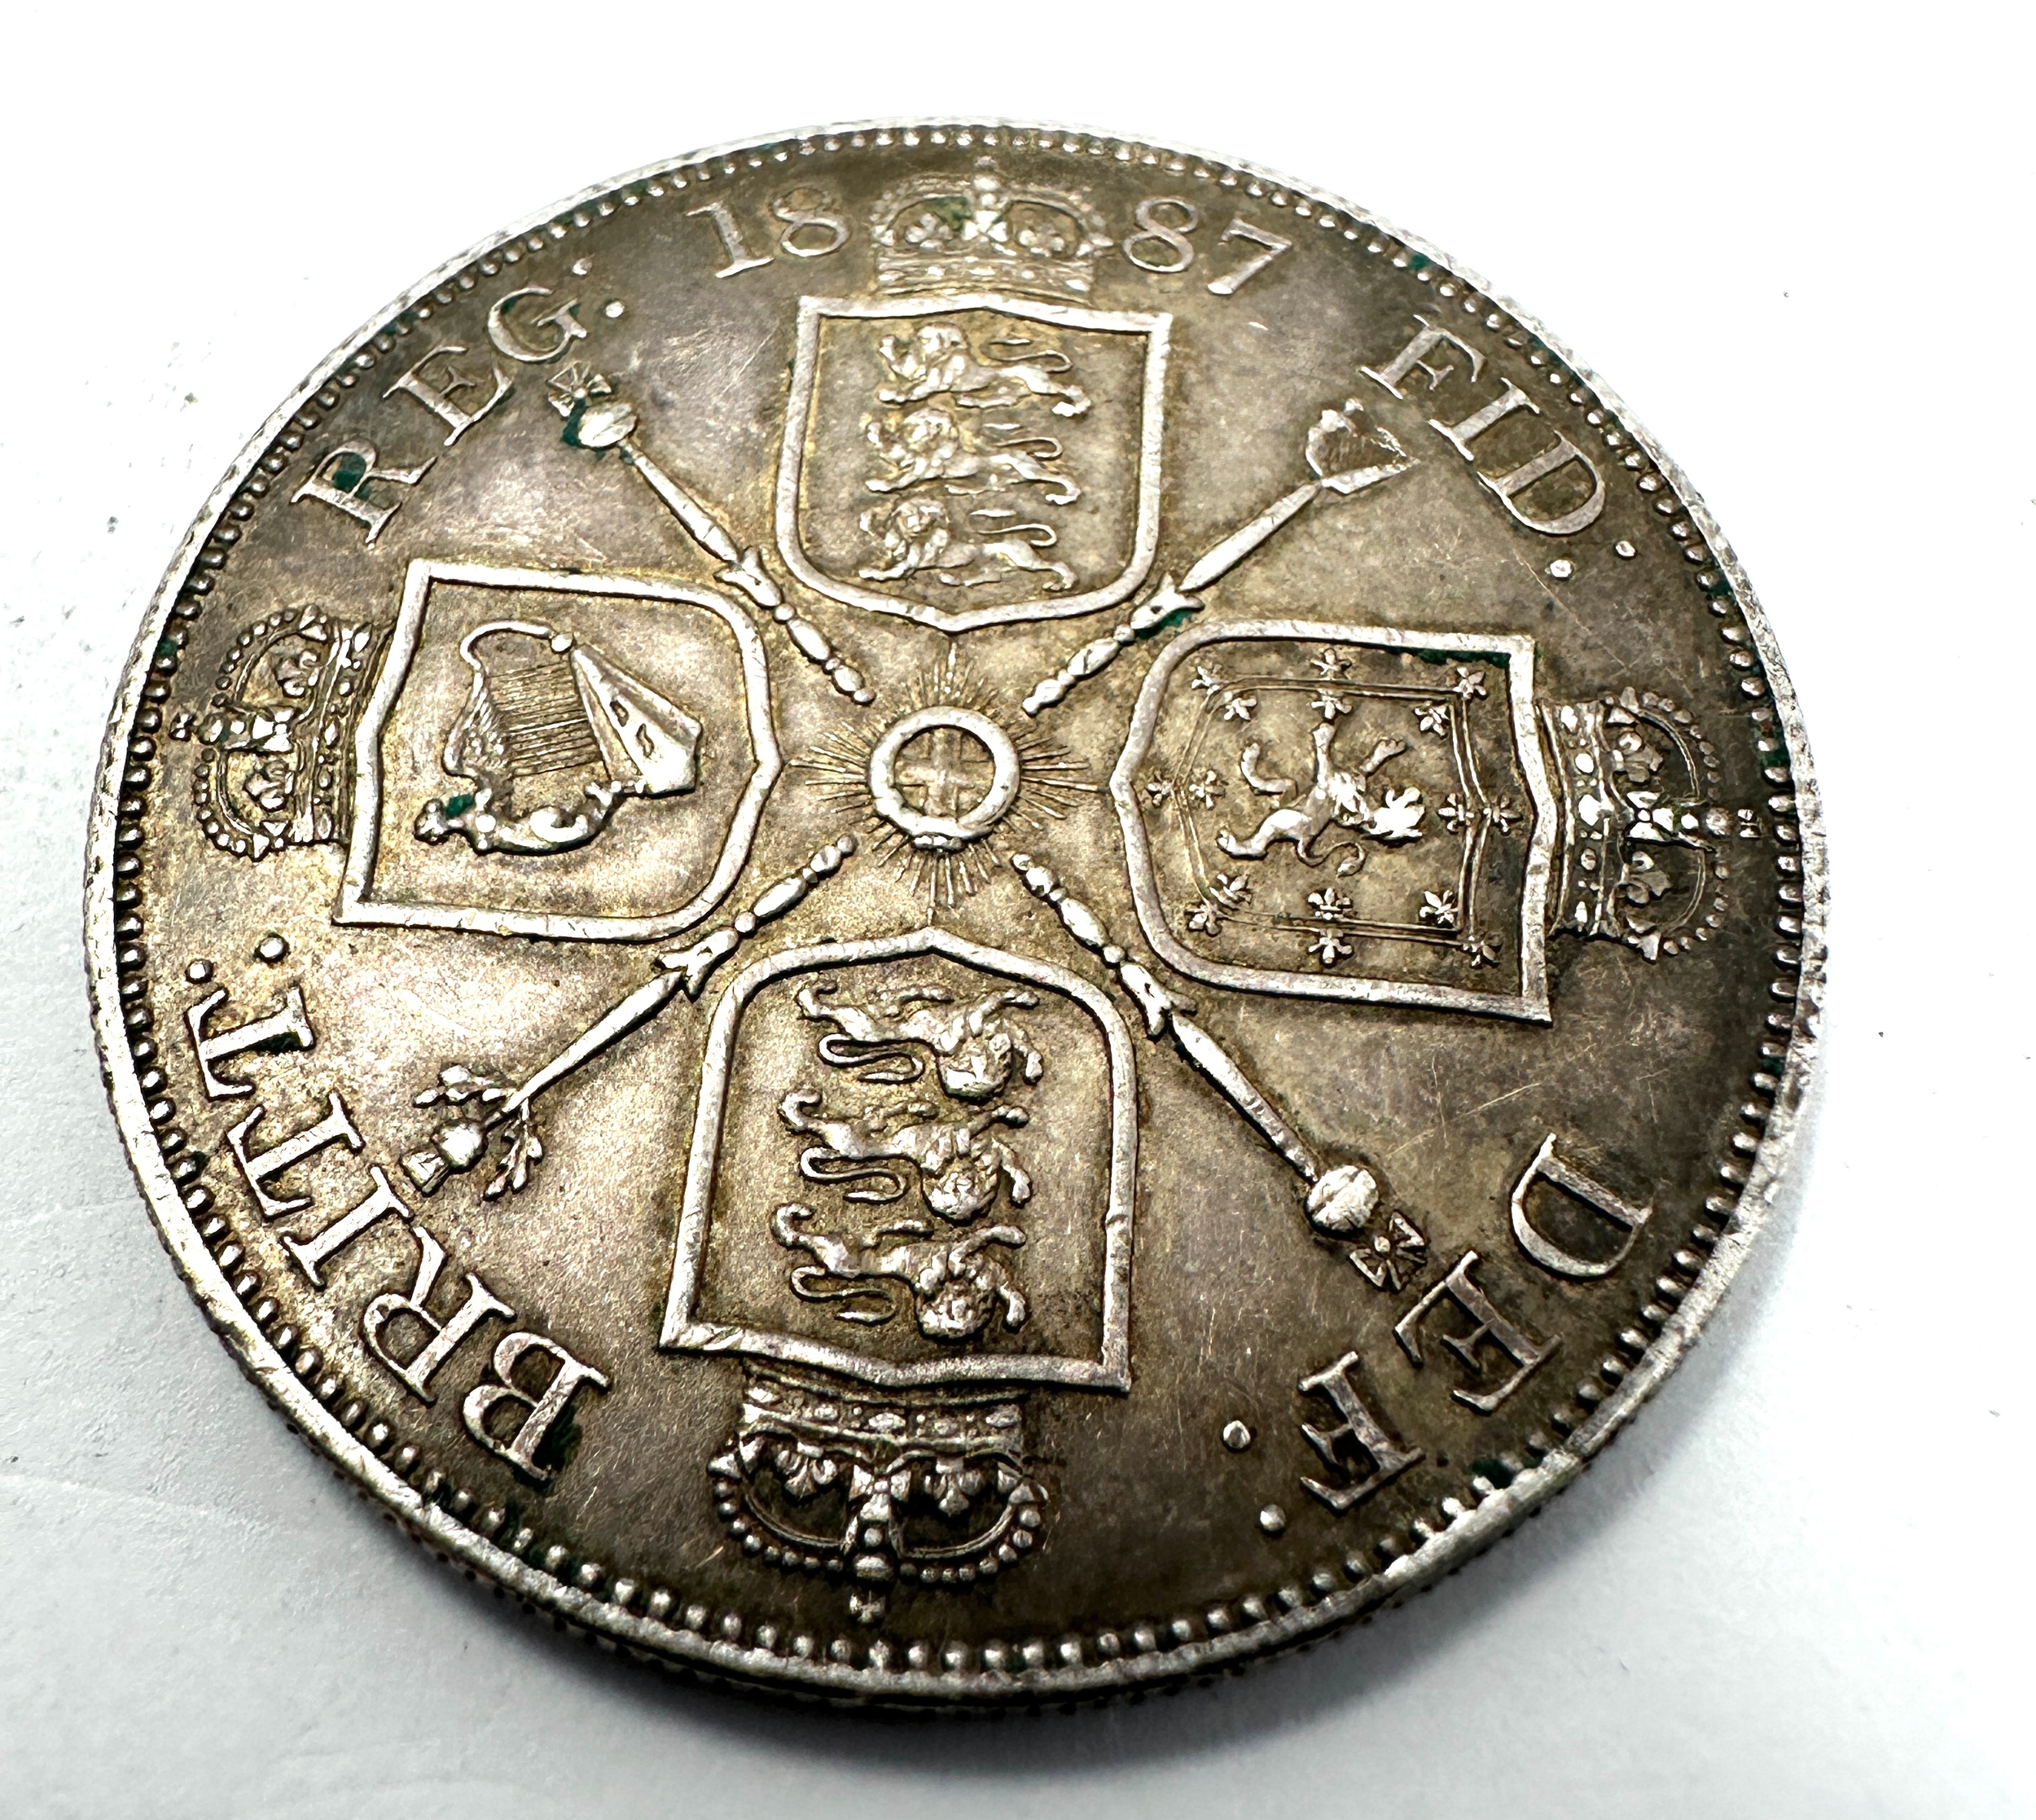 1887 Queen Victoria Jubilee Head Silver Double Florin high grade coin - Image 2 of 2